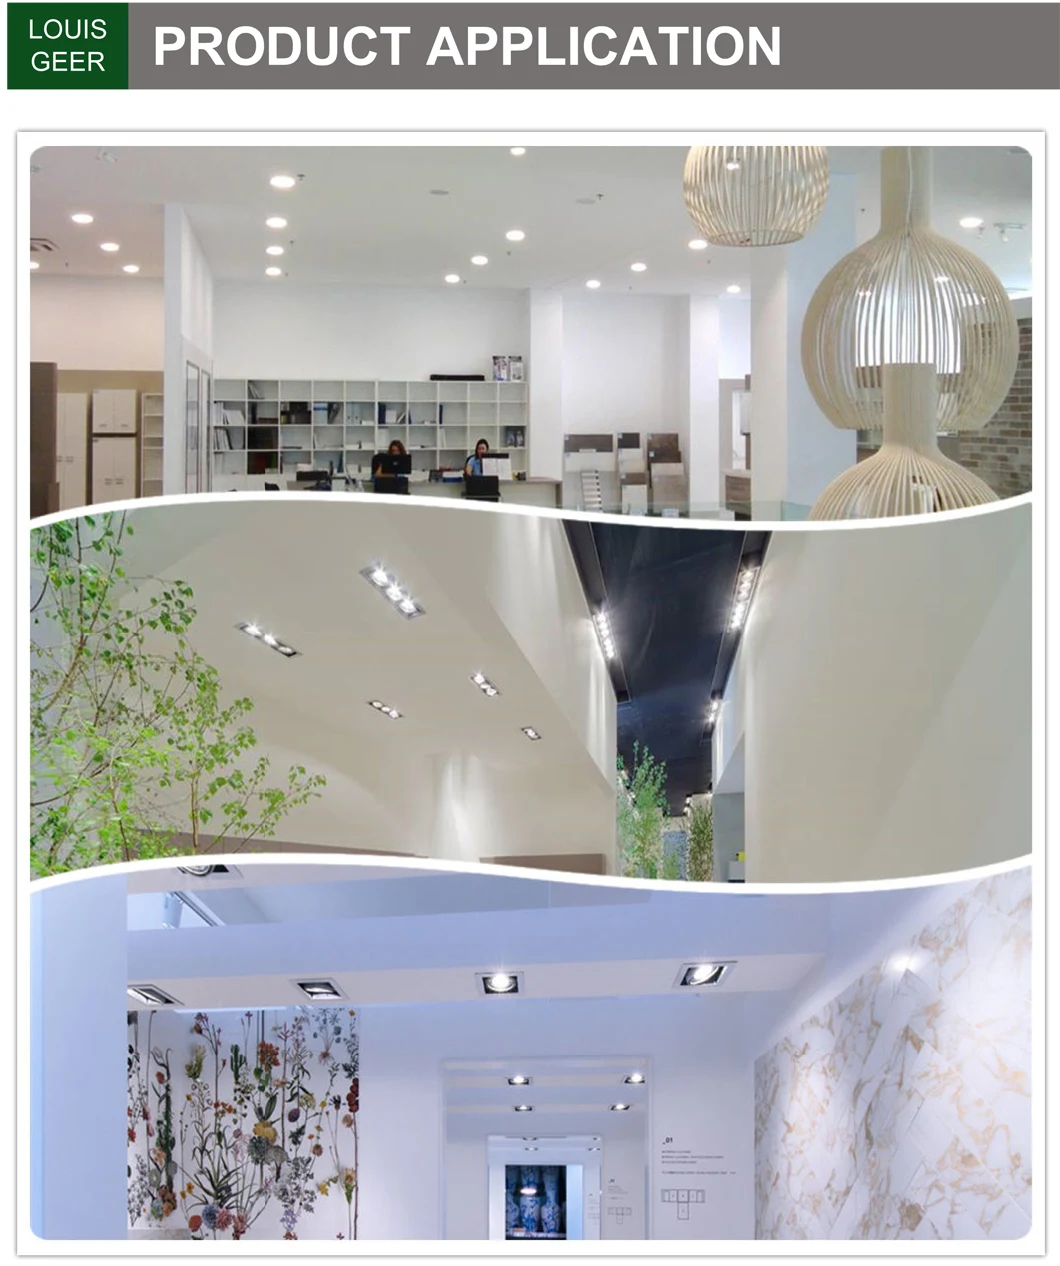 New Design Zhongshan Guzhen Surface Mounted Round 20W LED Ceiling Light Modern LED Ceiling Light